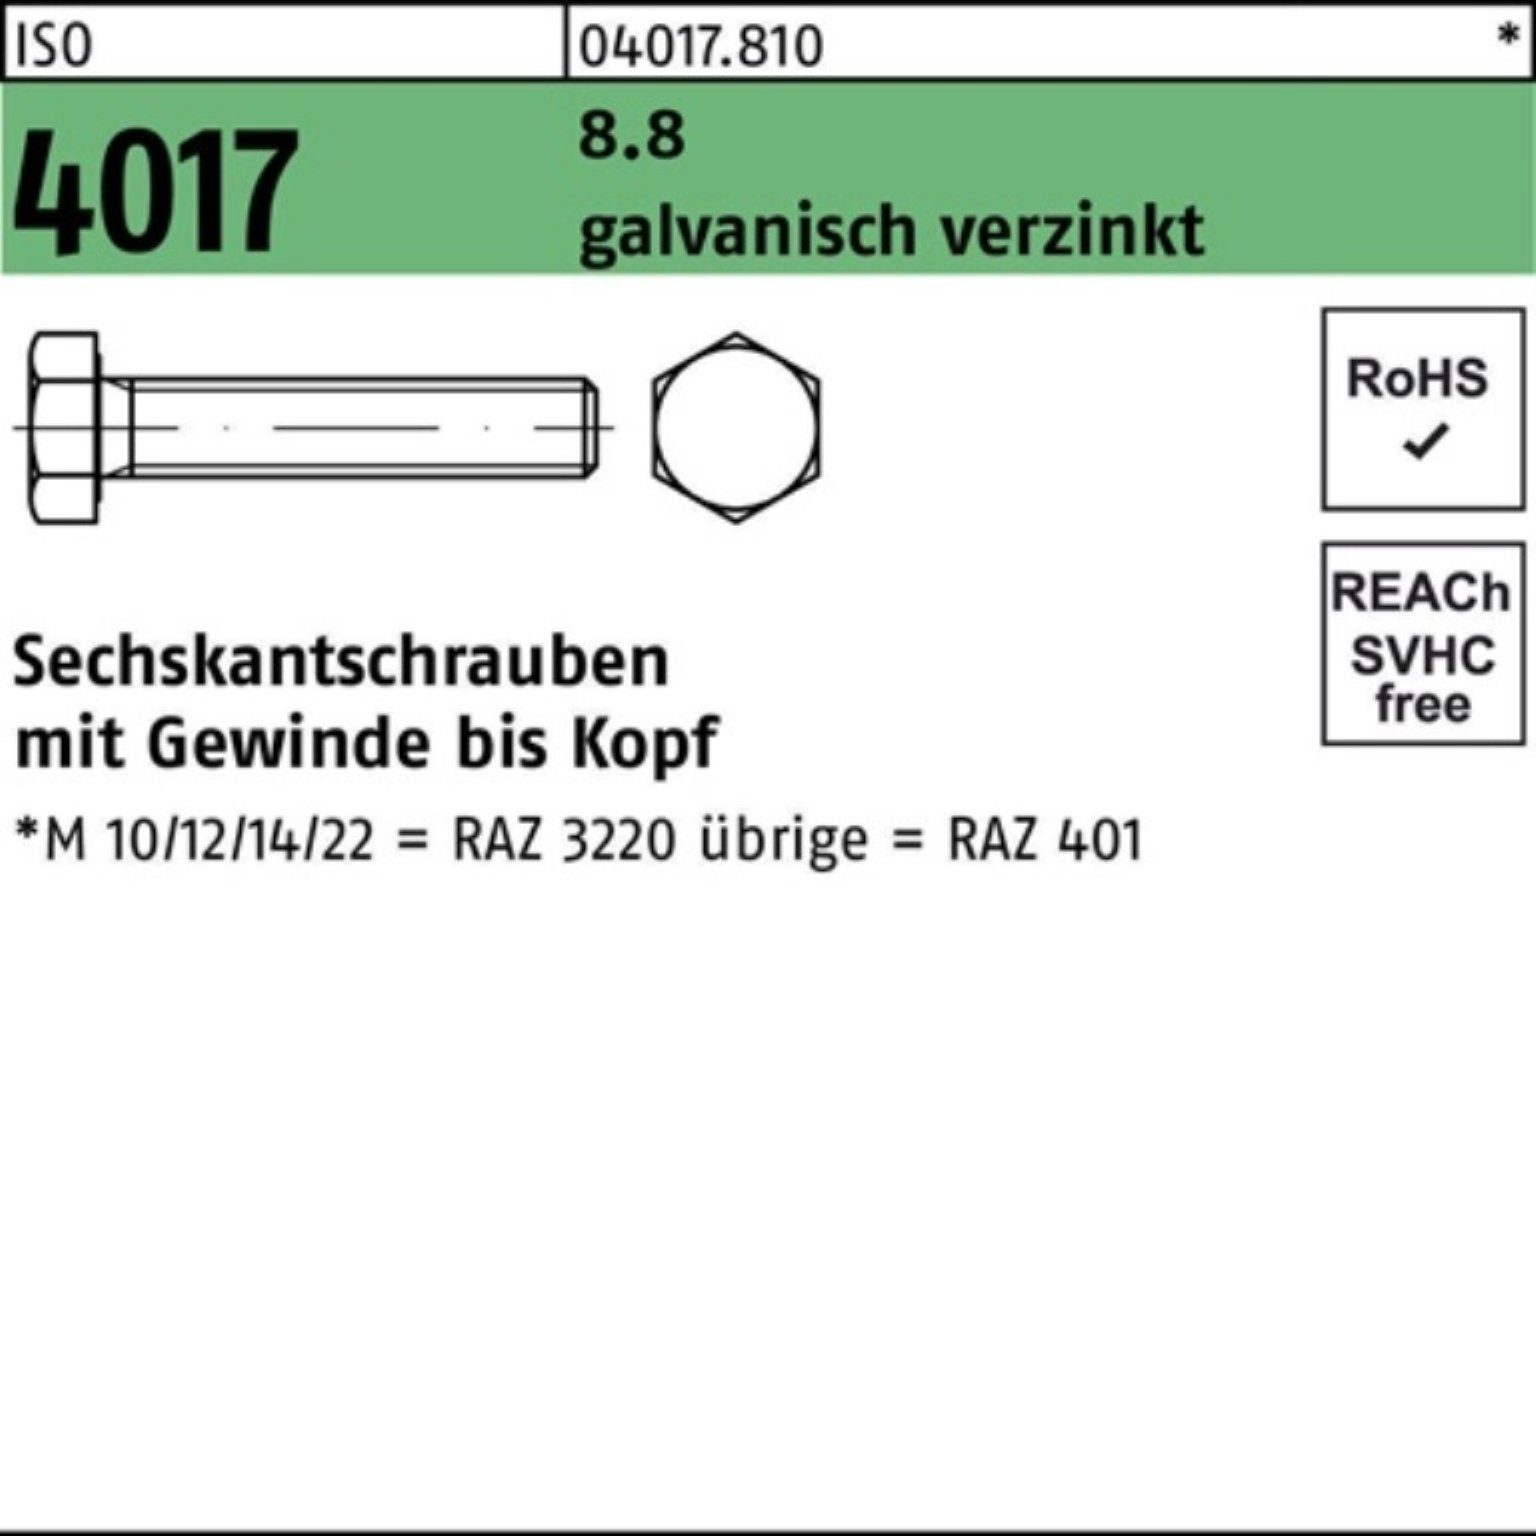 Bufab Sechskantschraube 200er Pack M6x 4017 galv.verz. 200 Sechskantschraube ISO 8.8 VG 85 St